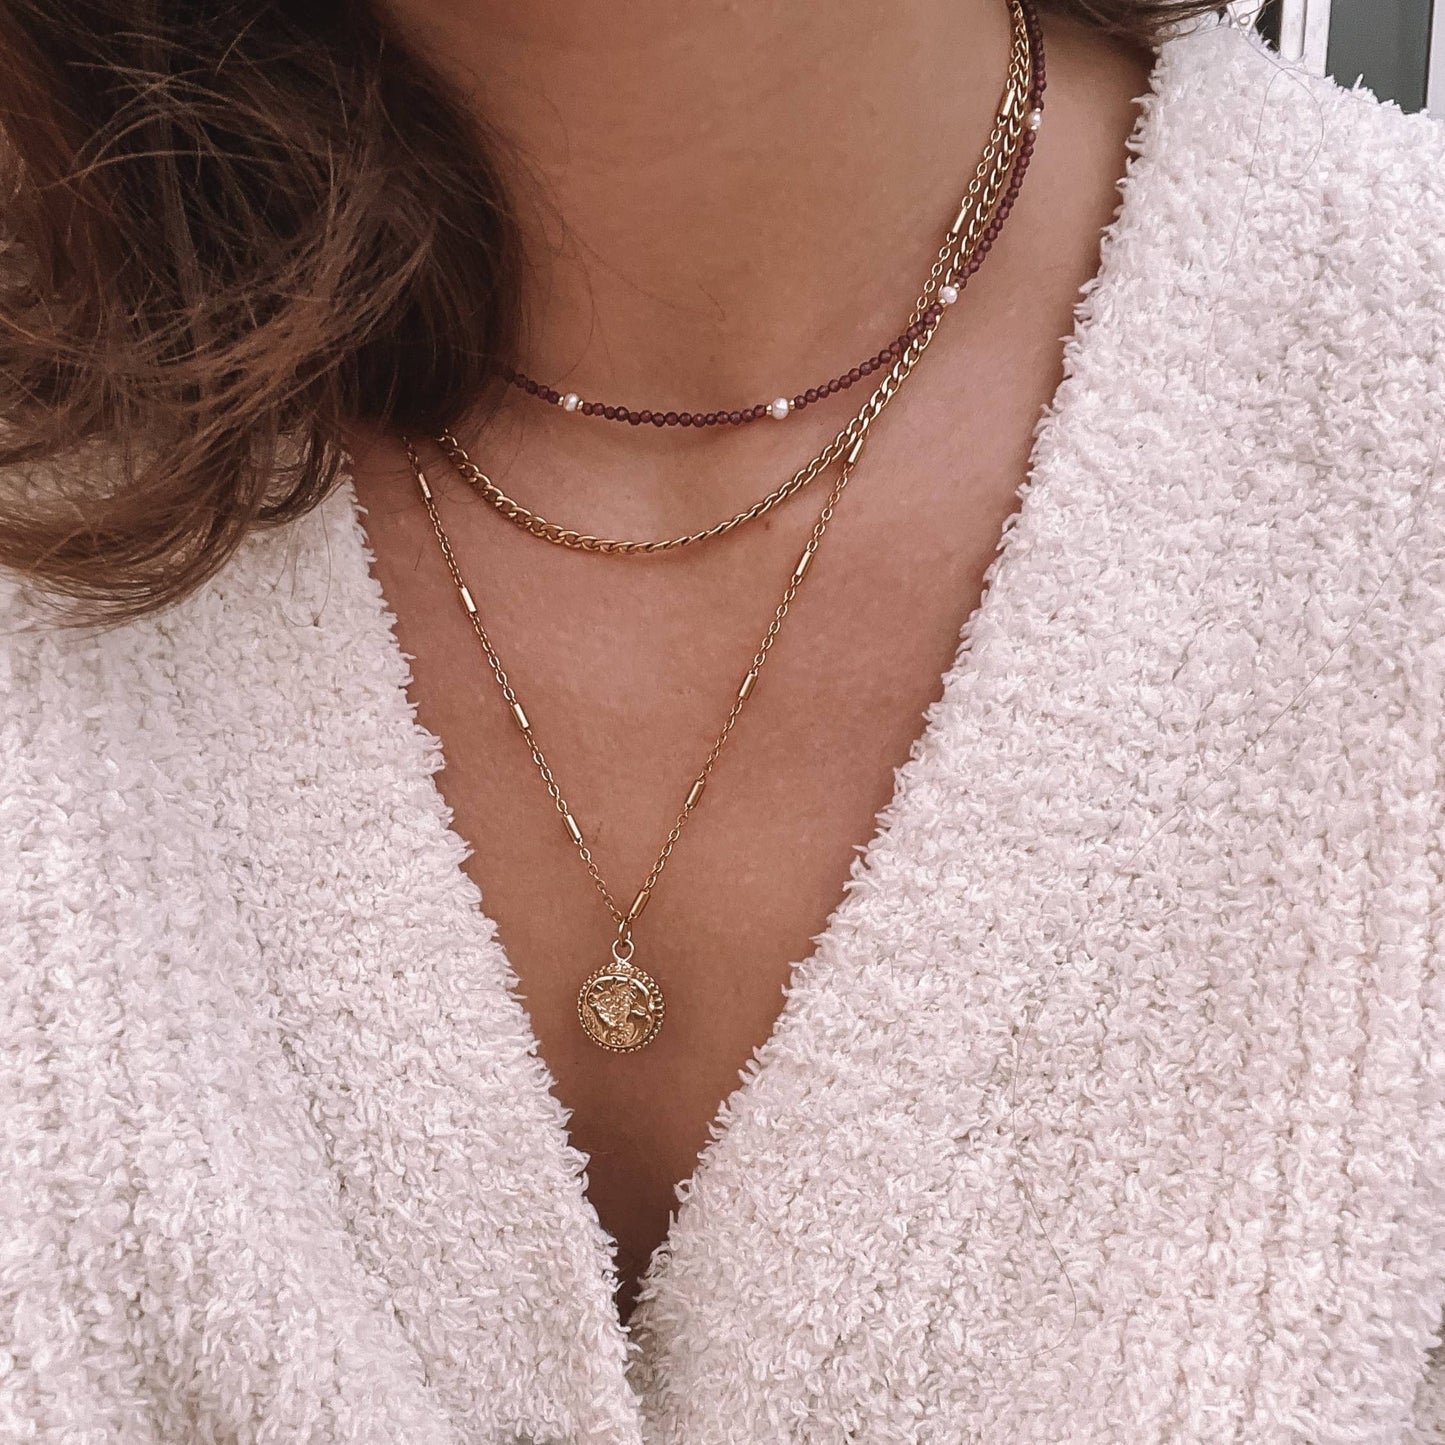 Chiara necklace